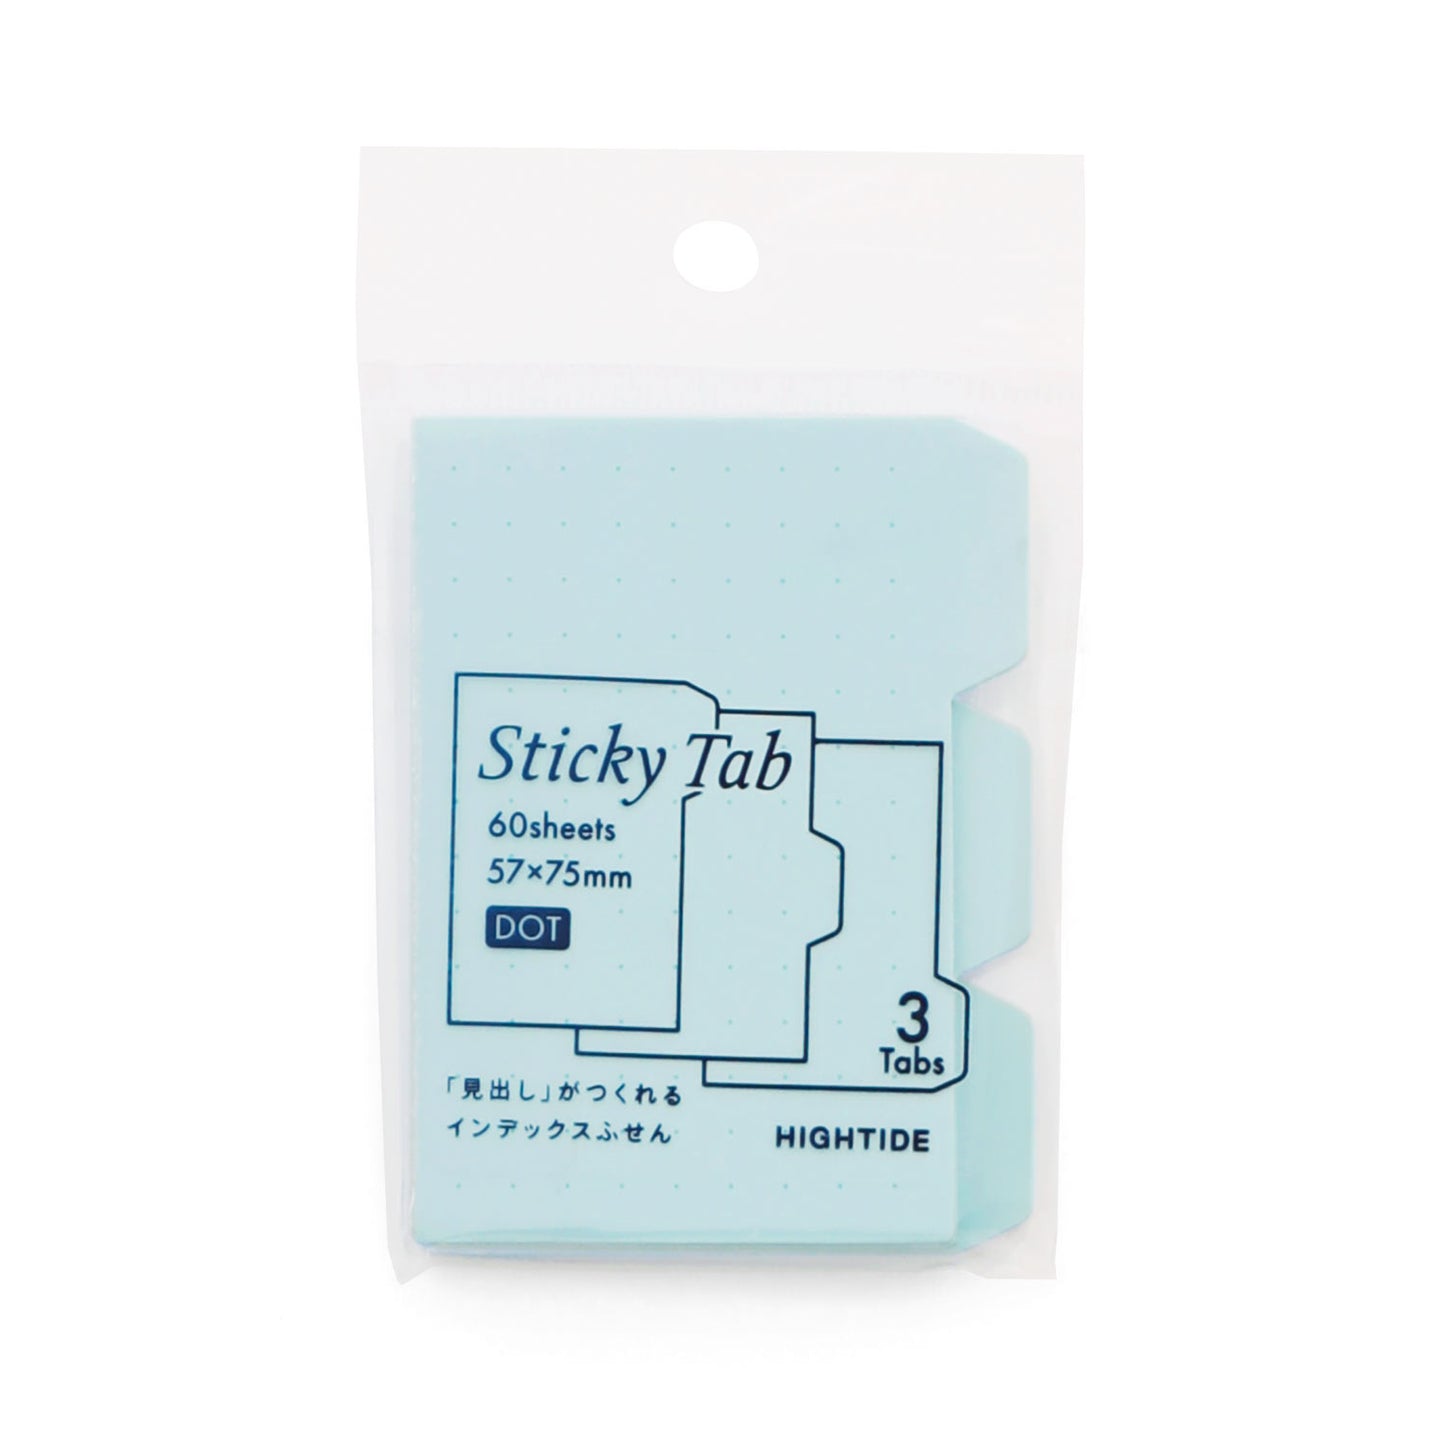 Sticky Tab